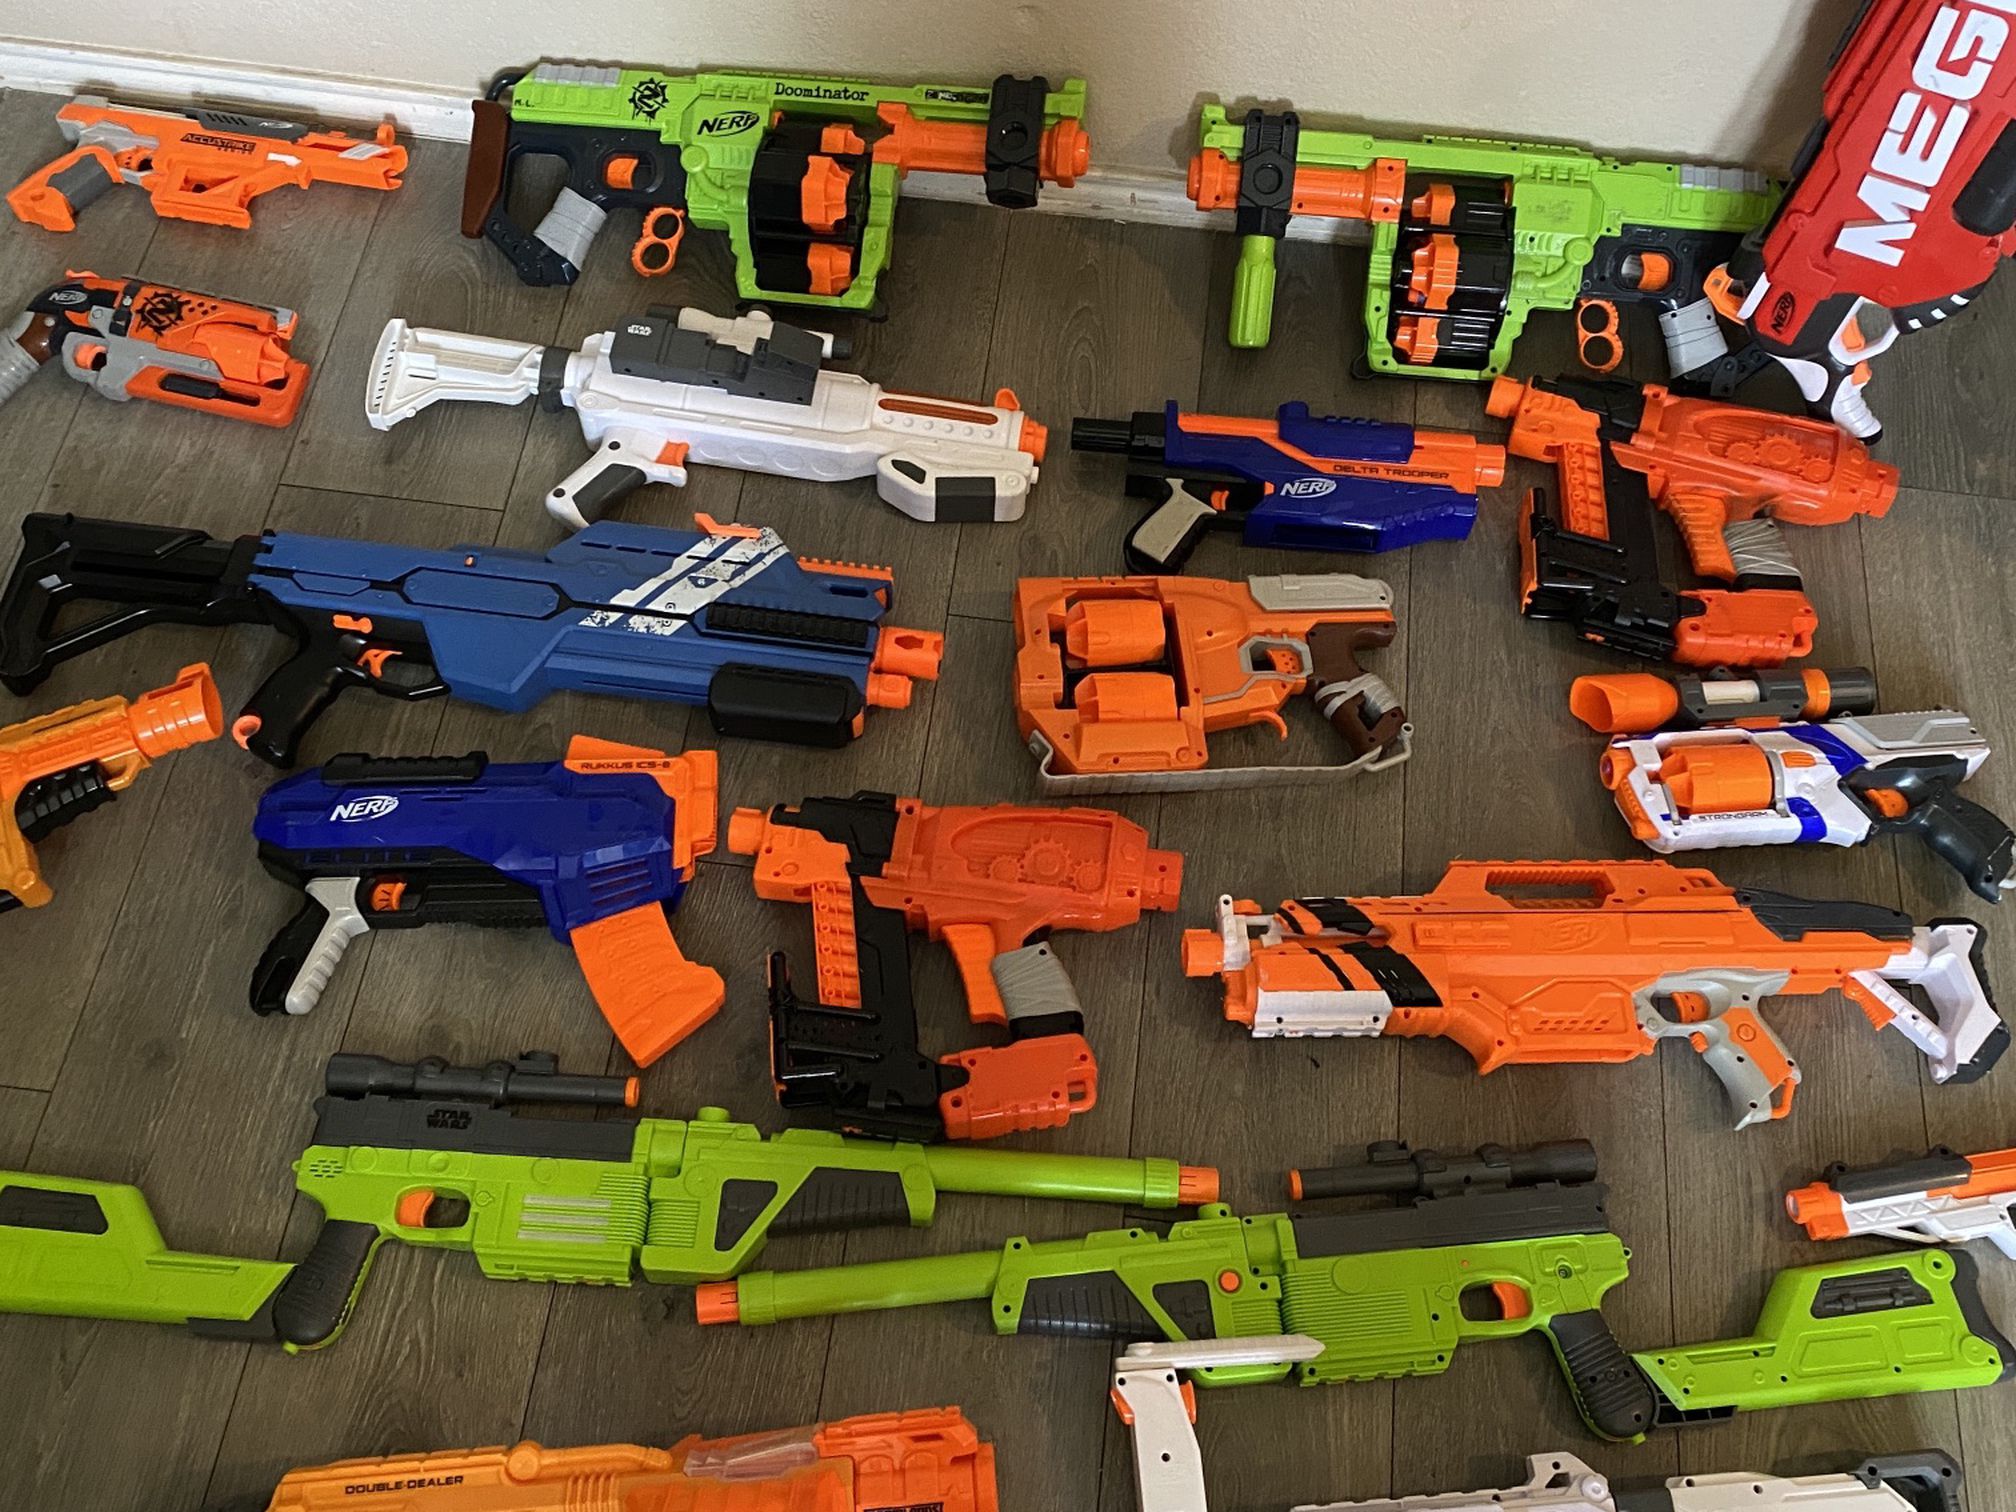 20 NERF guns